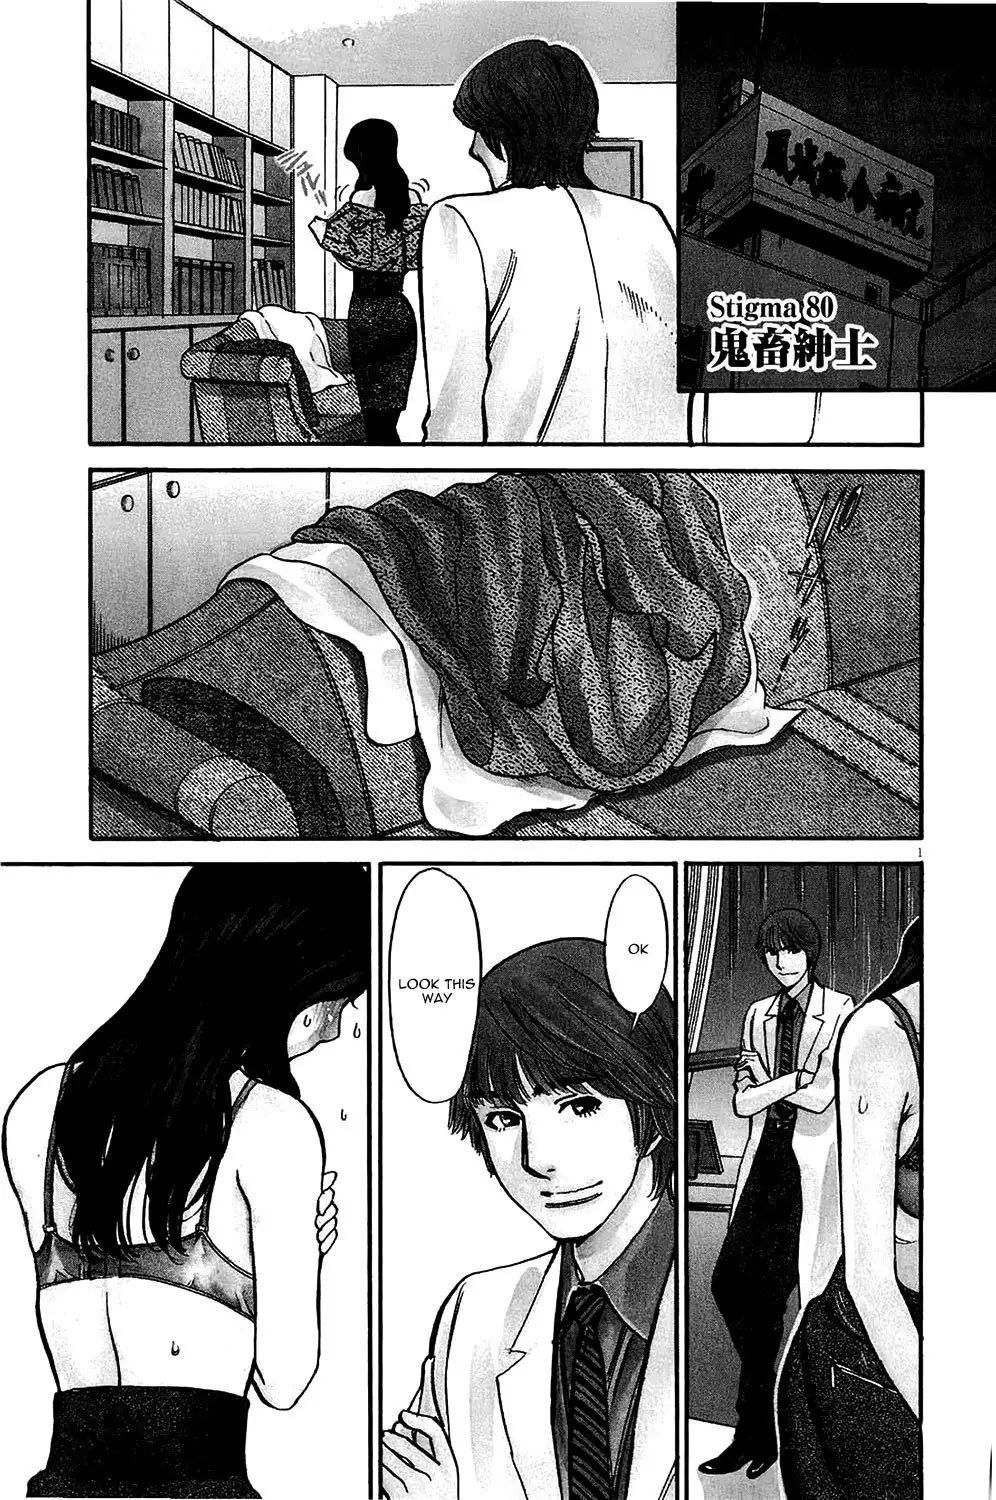 Kono S o, Mi yo! – Cupid no Itazura - Chapter 80 Page 1